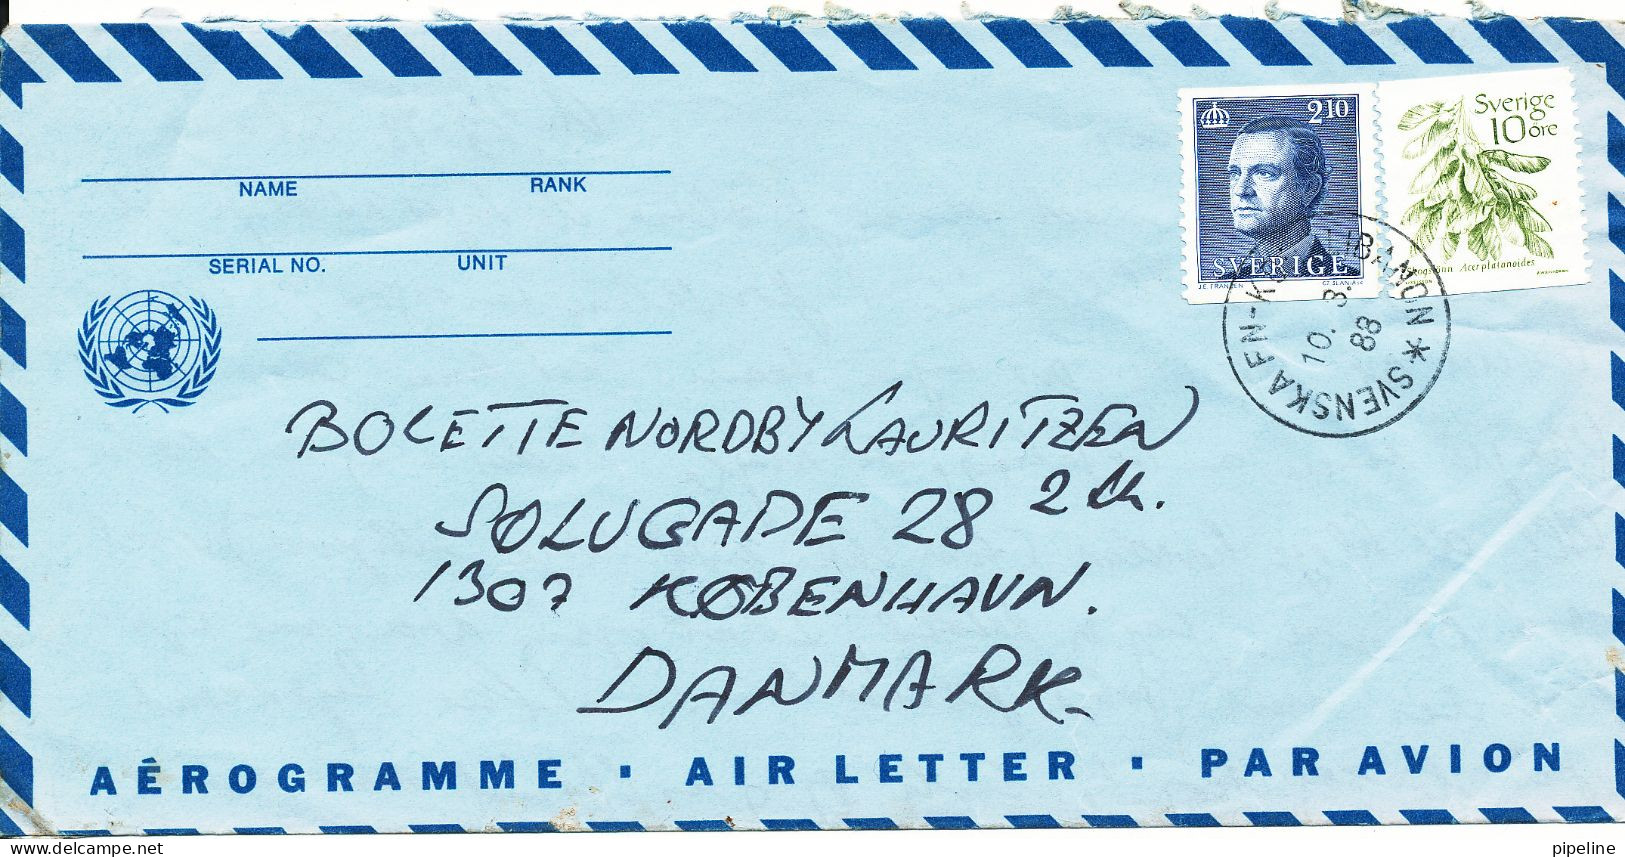 Sweden UN Aerogramme Svenska FN Komp Libanon 10-3-1988 Sent To Denmark - Military